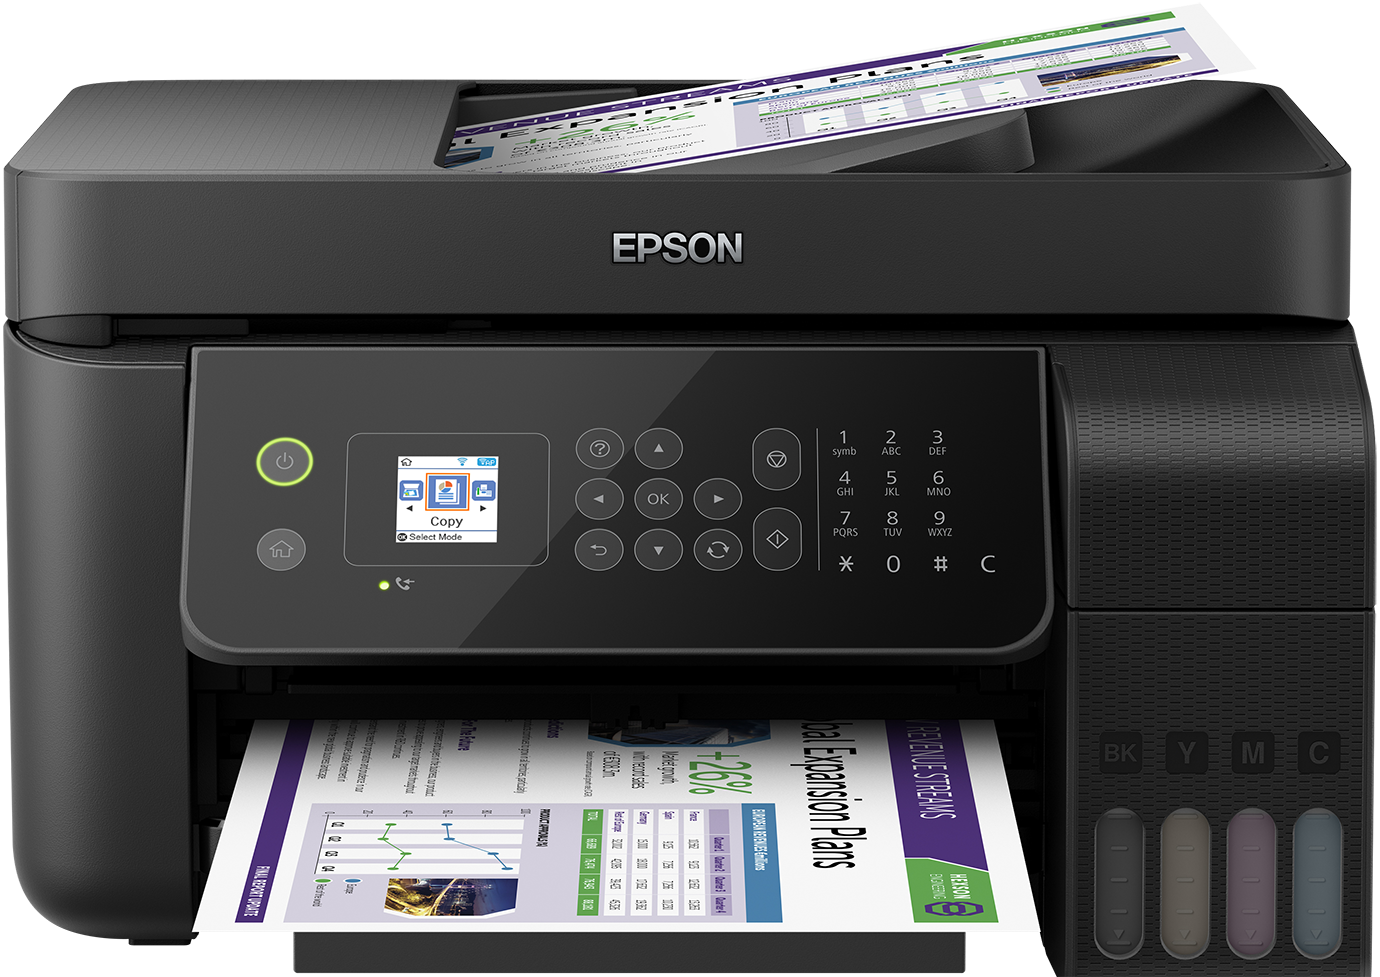 Epson L5190 Series Printer - Featured